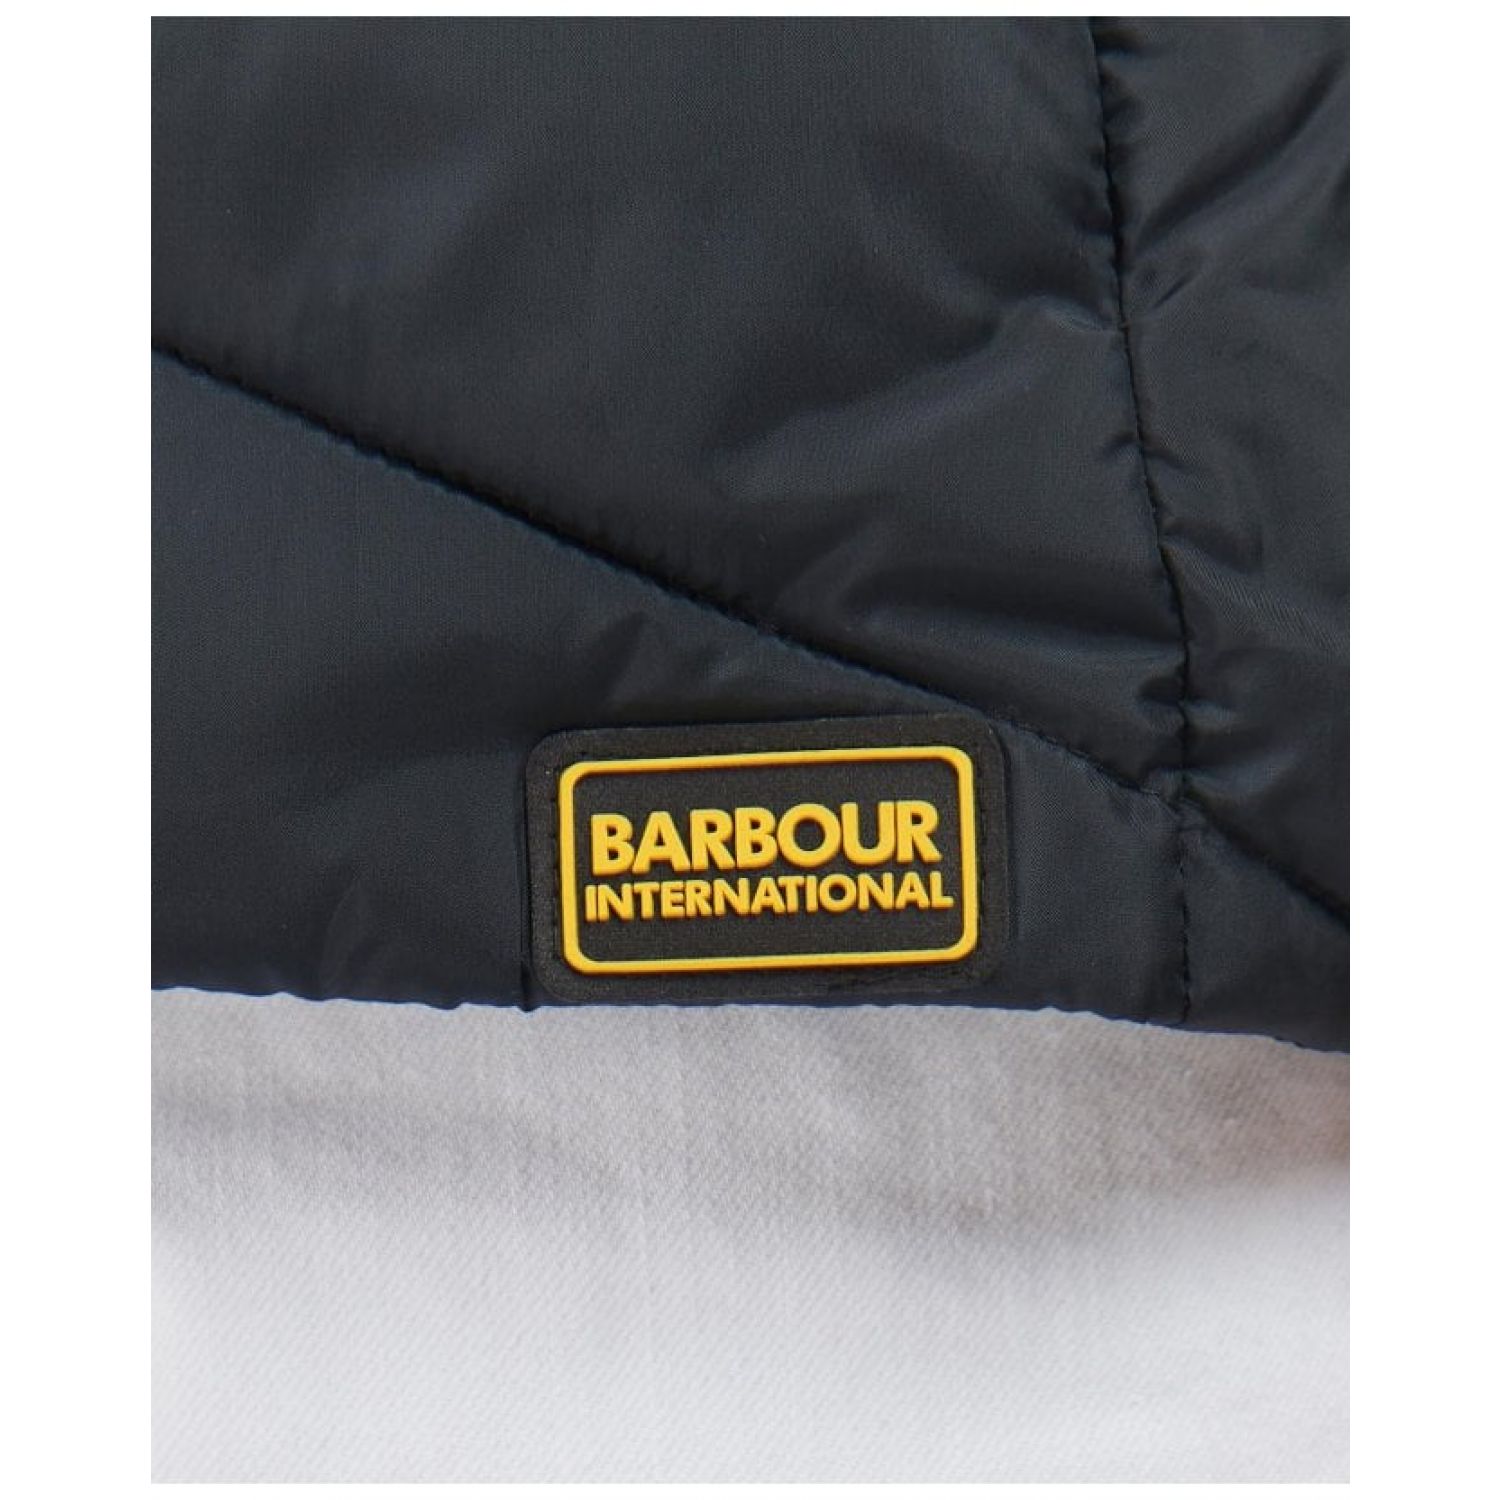 Barbour International Santa Rosa Quilted Gilet LGI0084